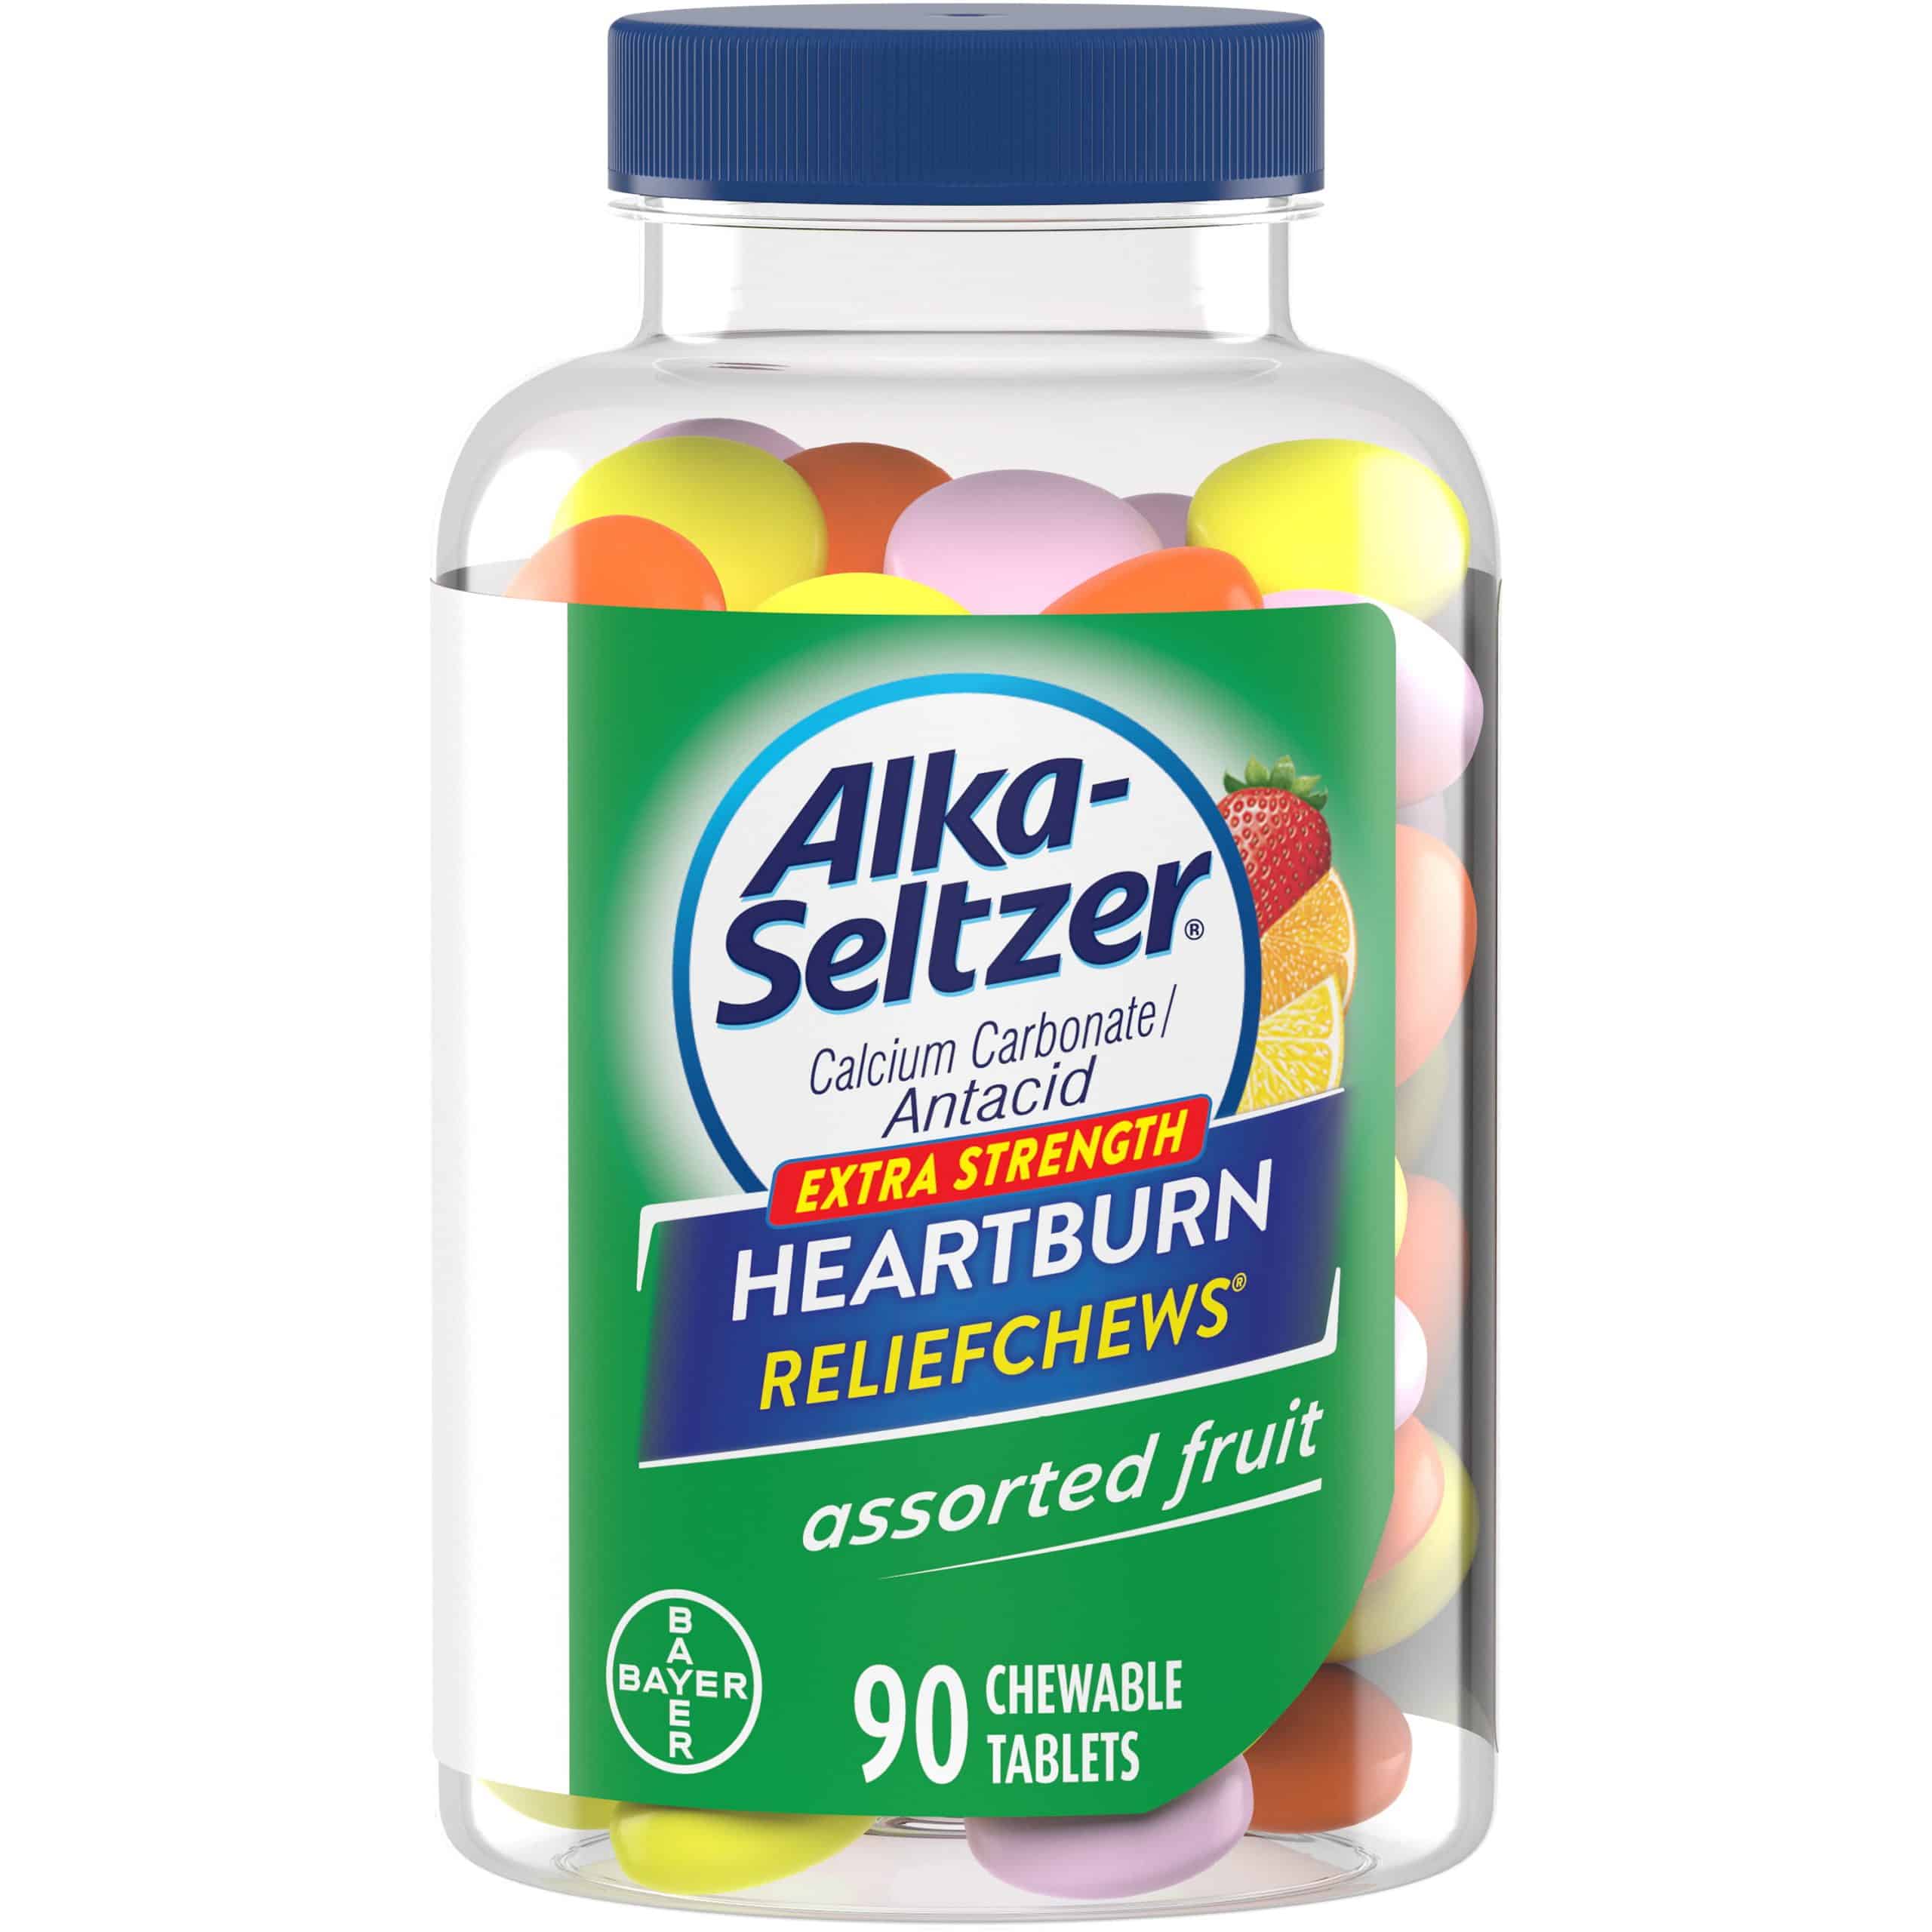 Alka Seltzer Extra Strength Heartburn Relief Chews Antacid Tablets